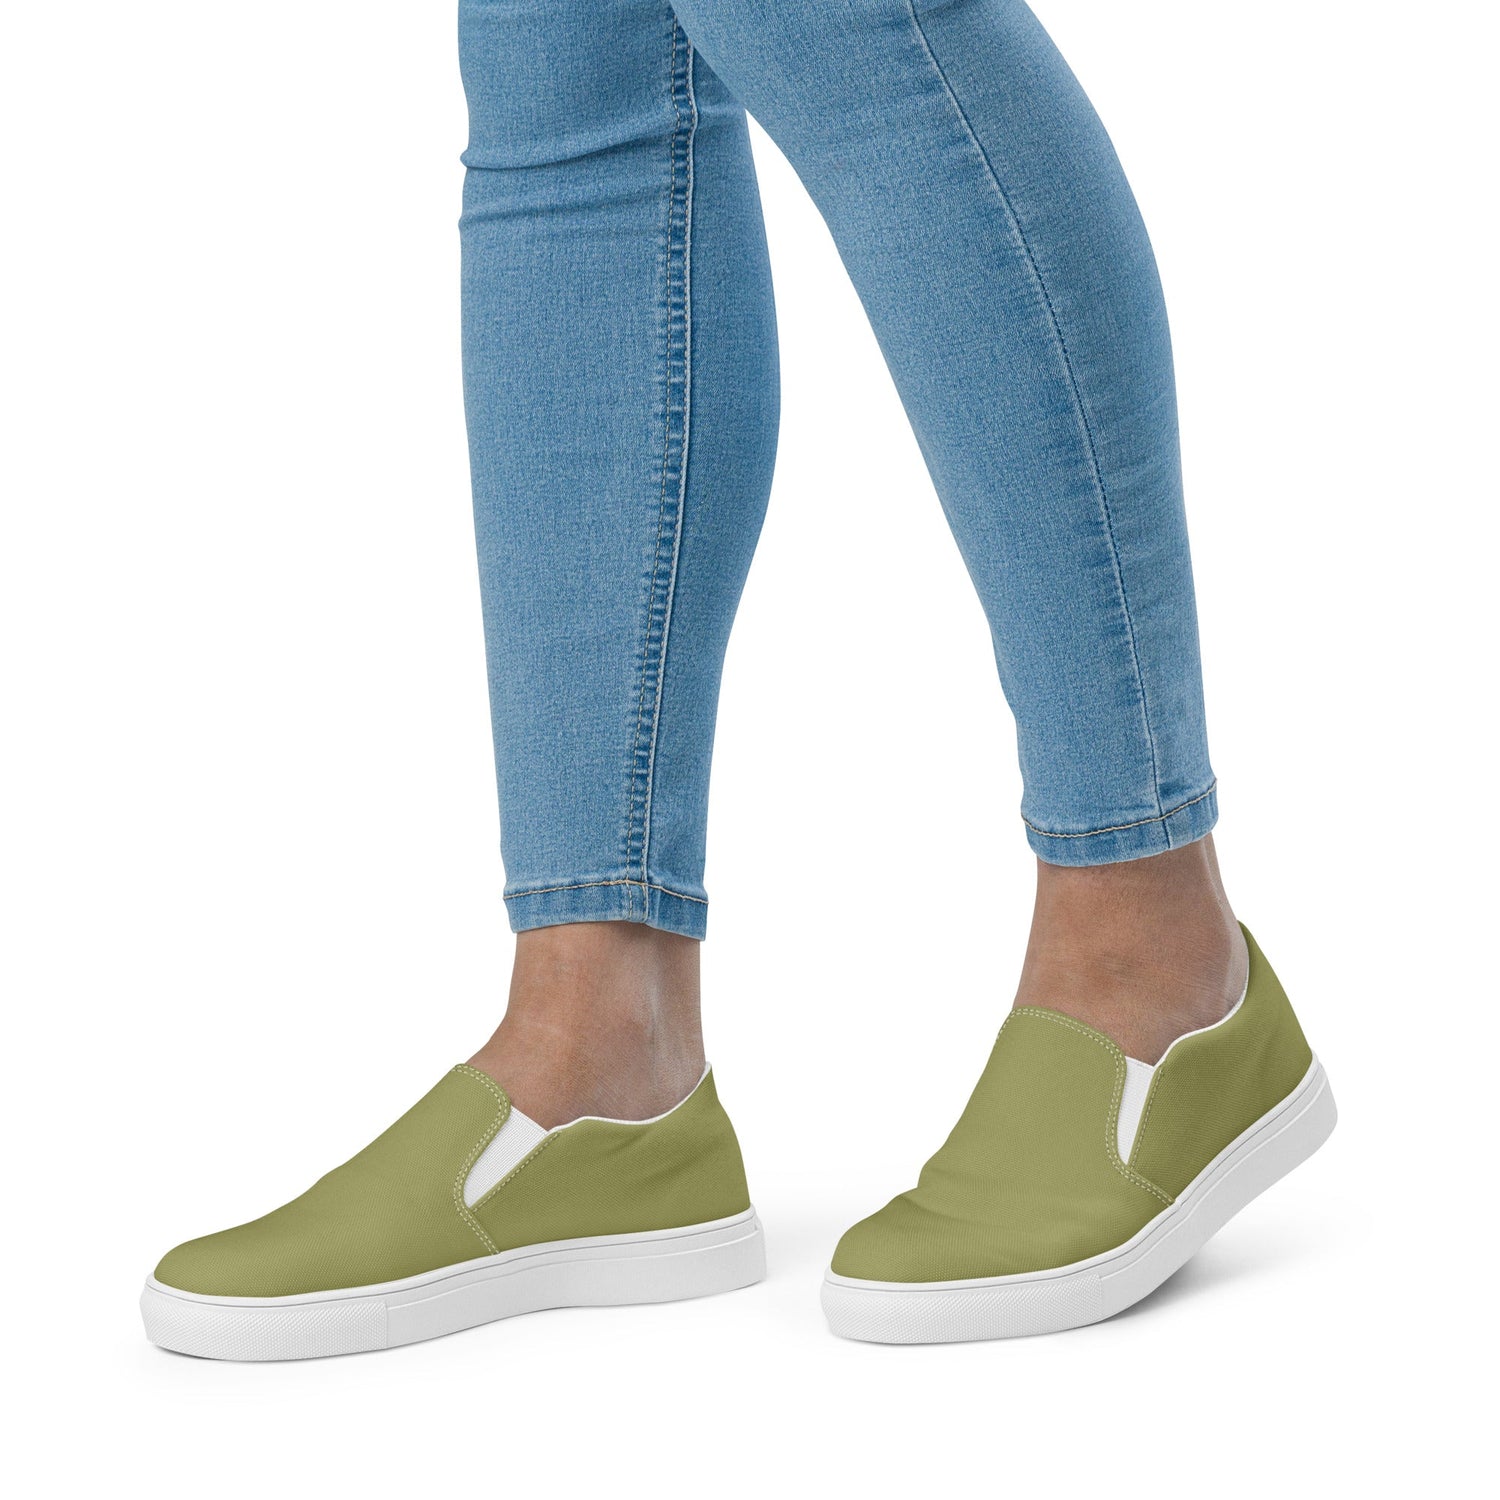 klasneakers Women’s slip-on canvas shoes - Light Moss